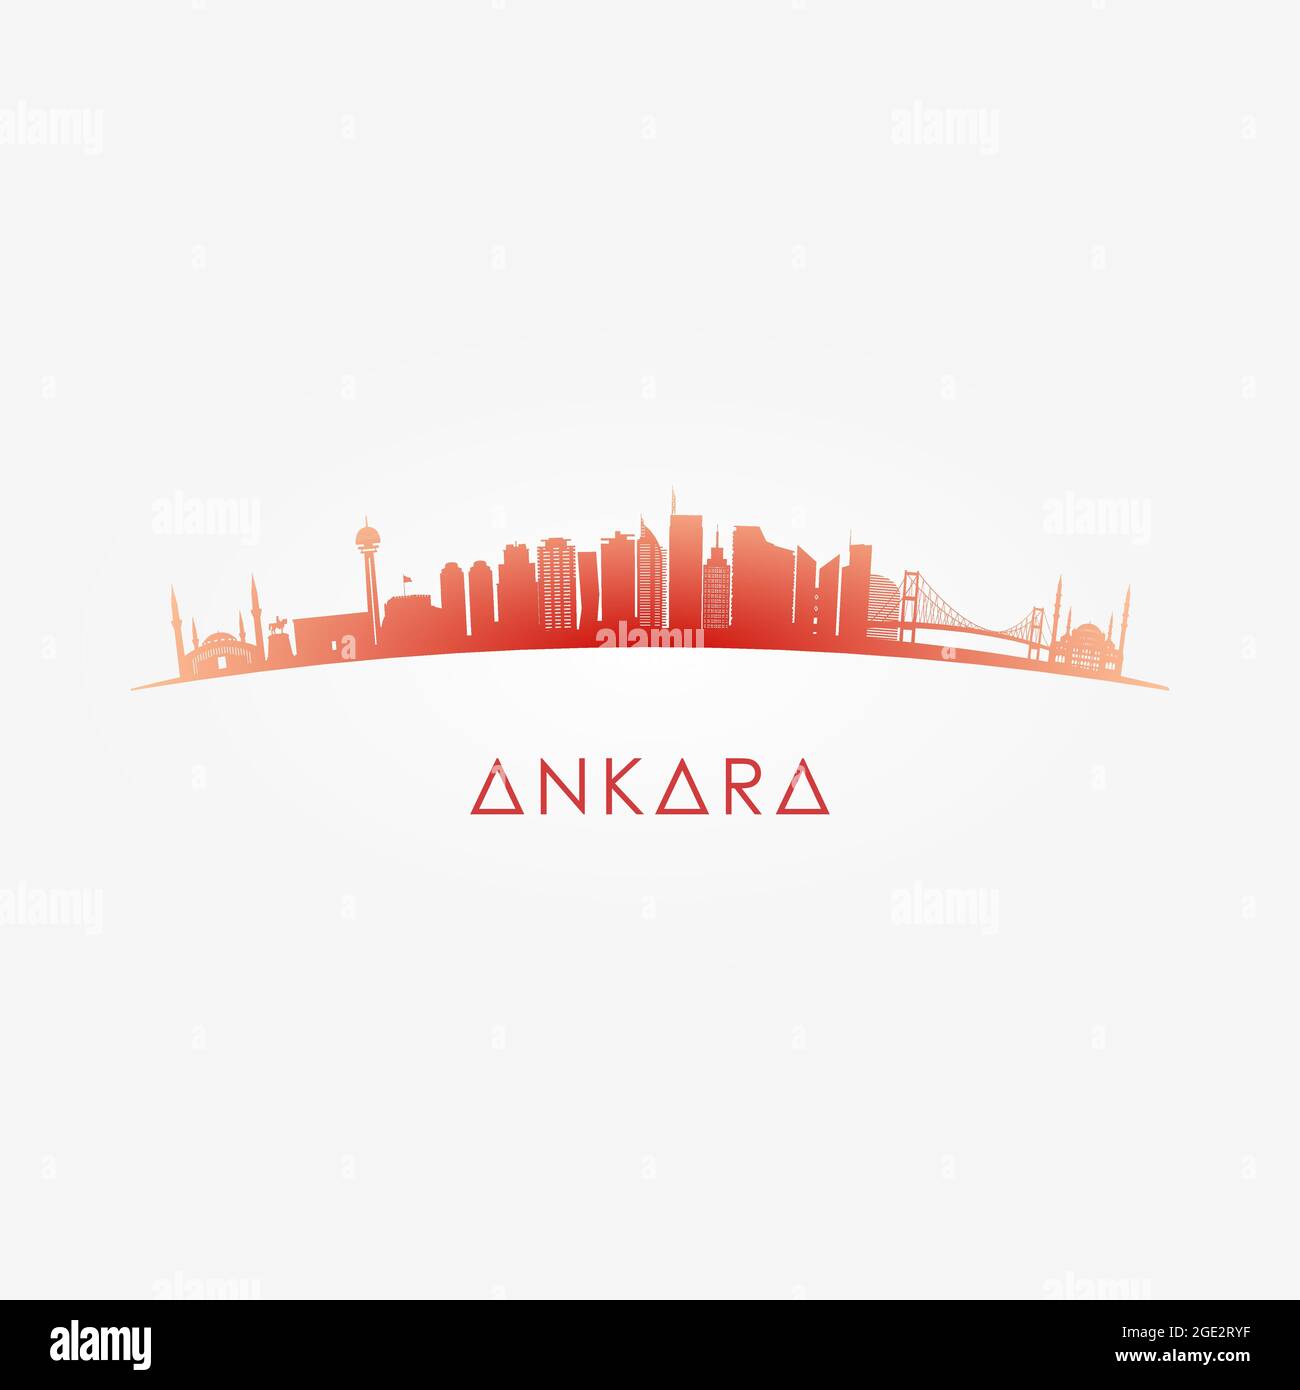 30k+ Ankara Pictures | Download Free Images on Unsplash